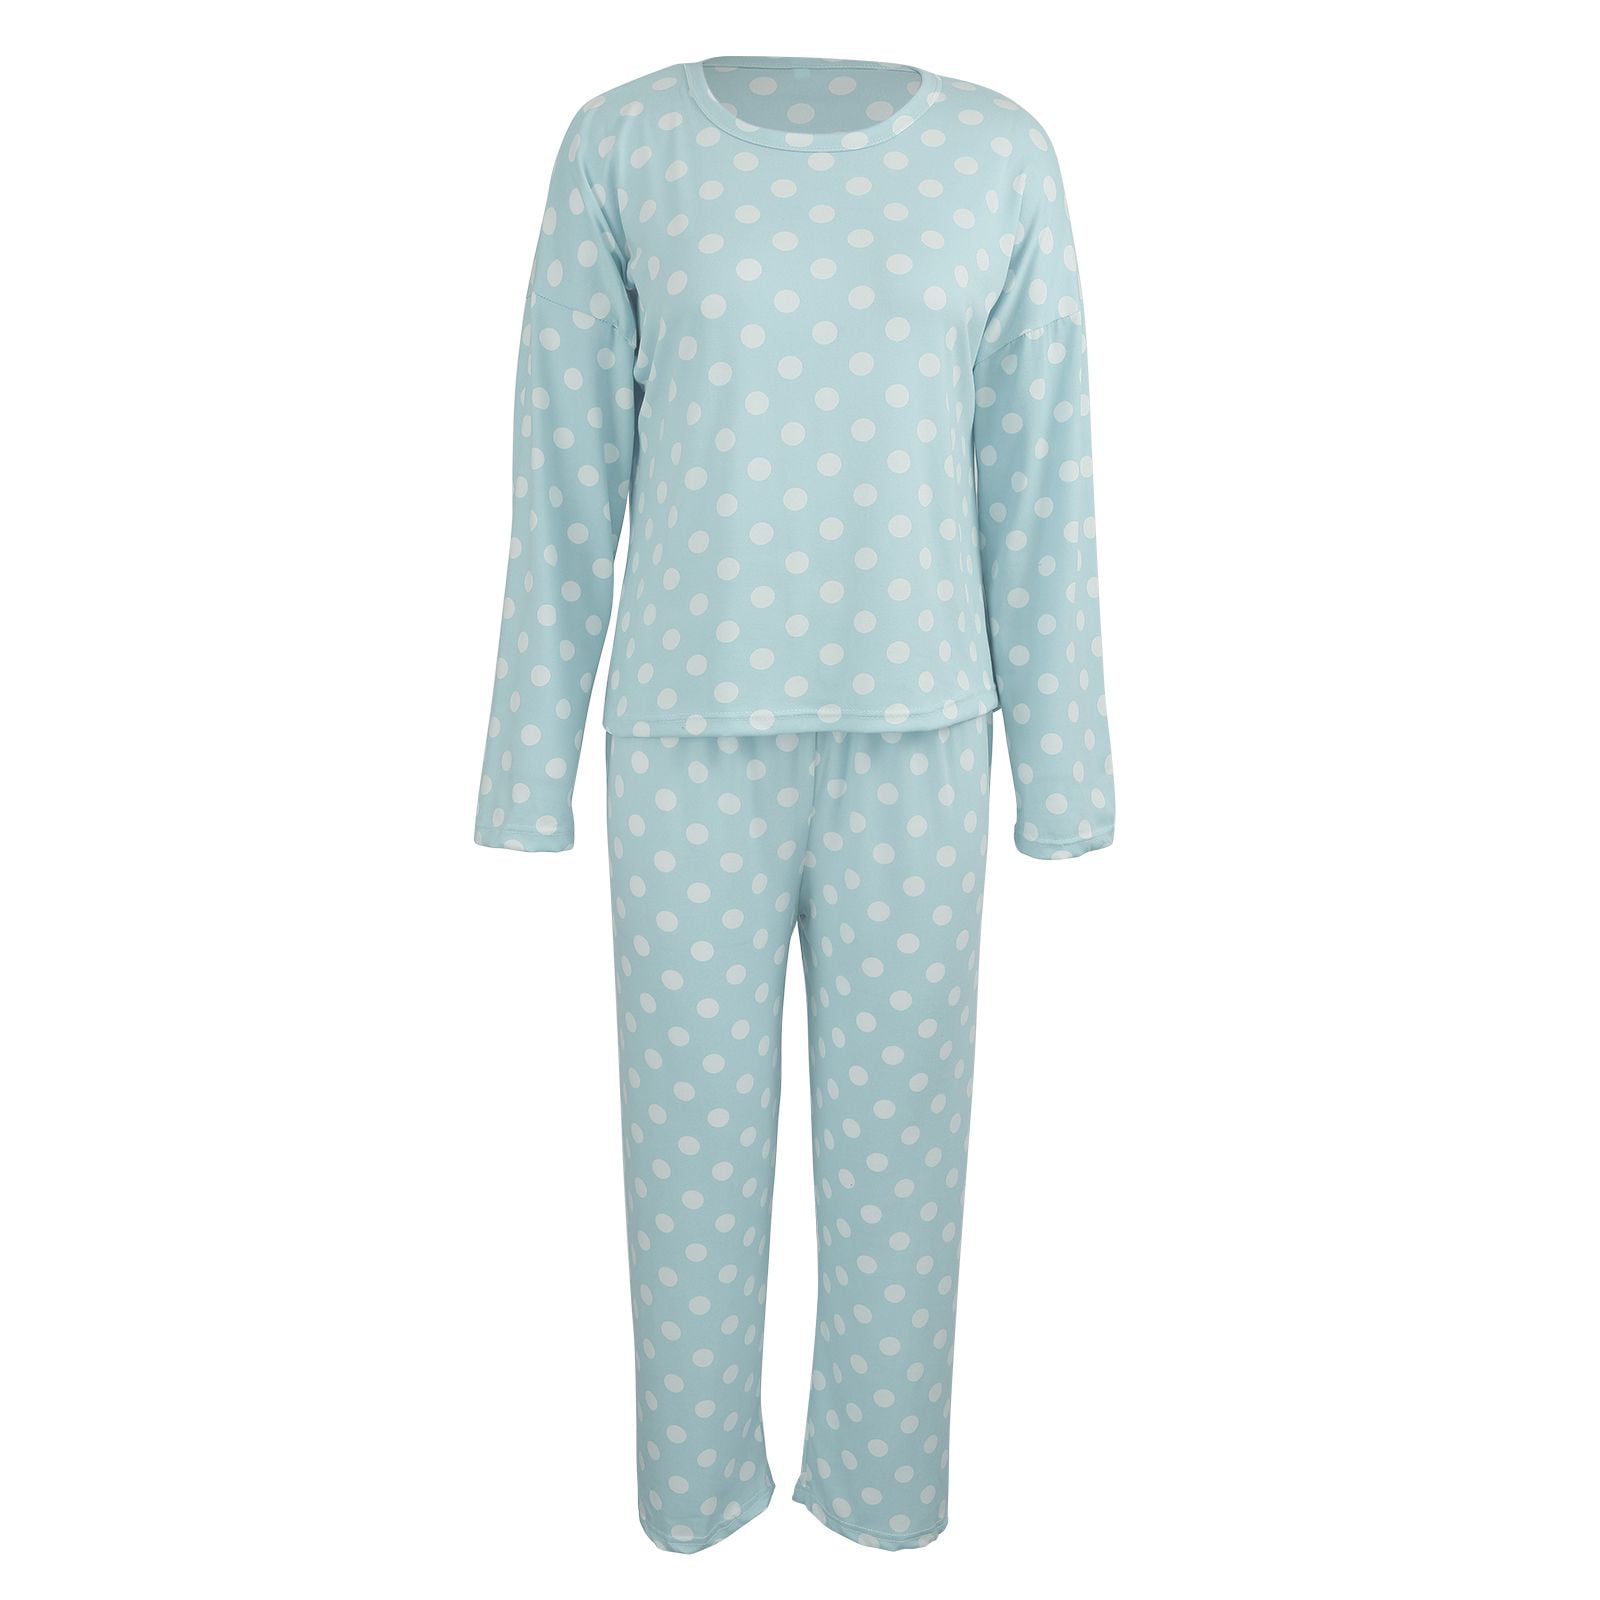 Ollabaky Pajamas Women Polka Dot Elephant Blue Pajama Set Long Sleeve  Sleepwear Soft Pjs Lounge Sets at  Women's Clothing store